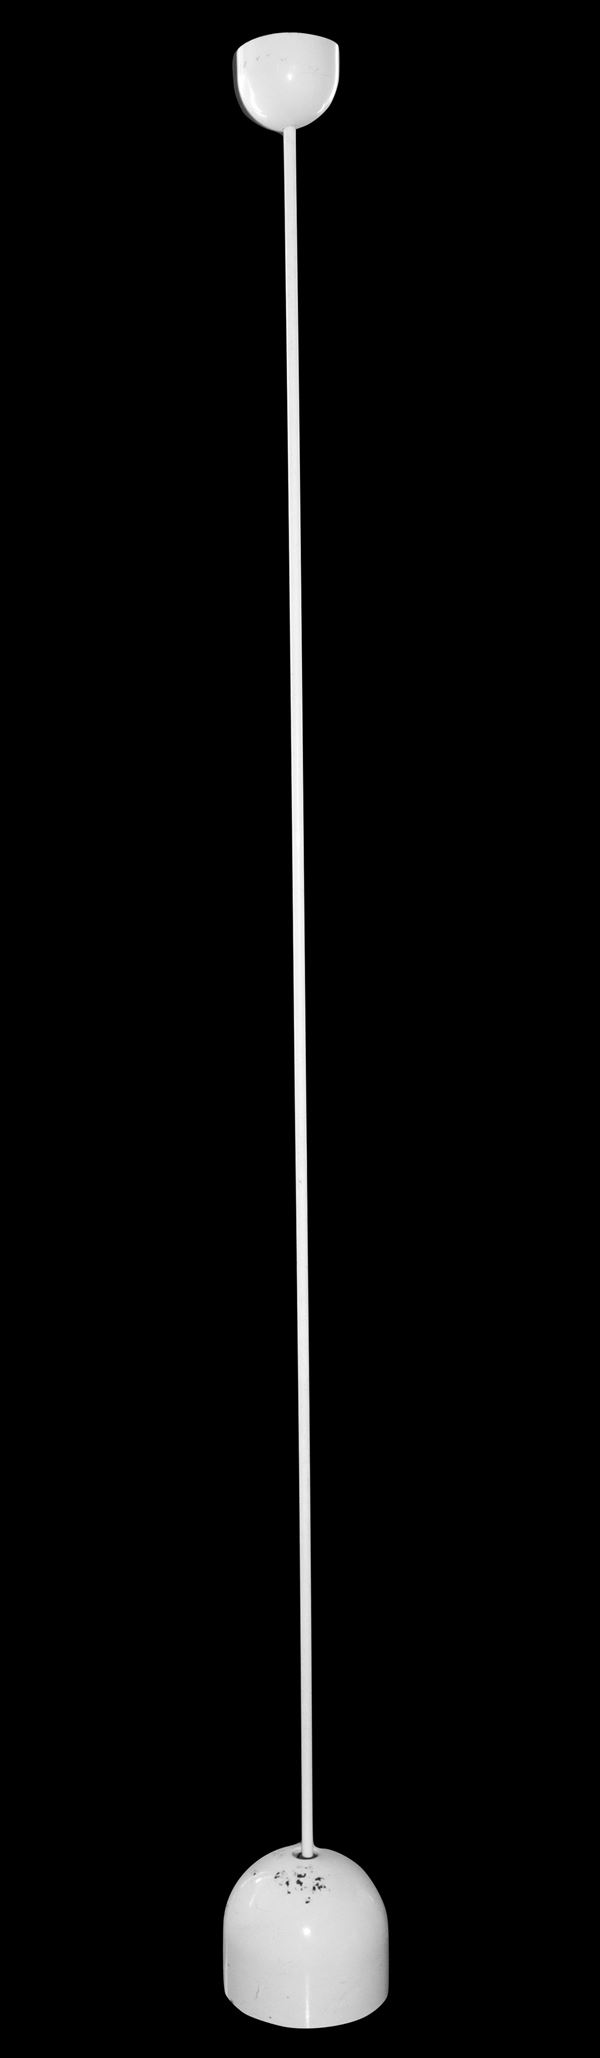 Piantana a stelo laccata bianco, modello Ipotenusa